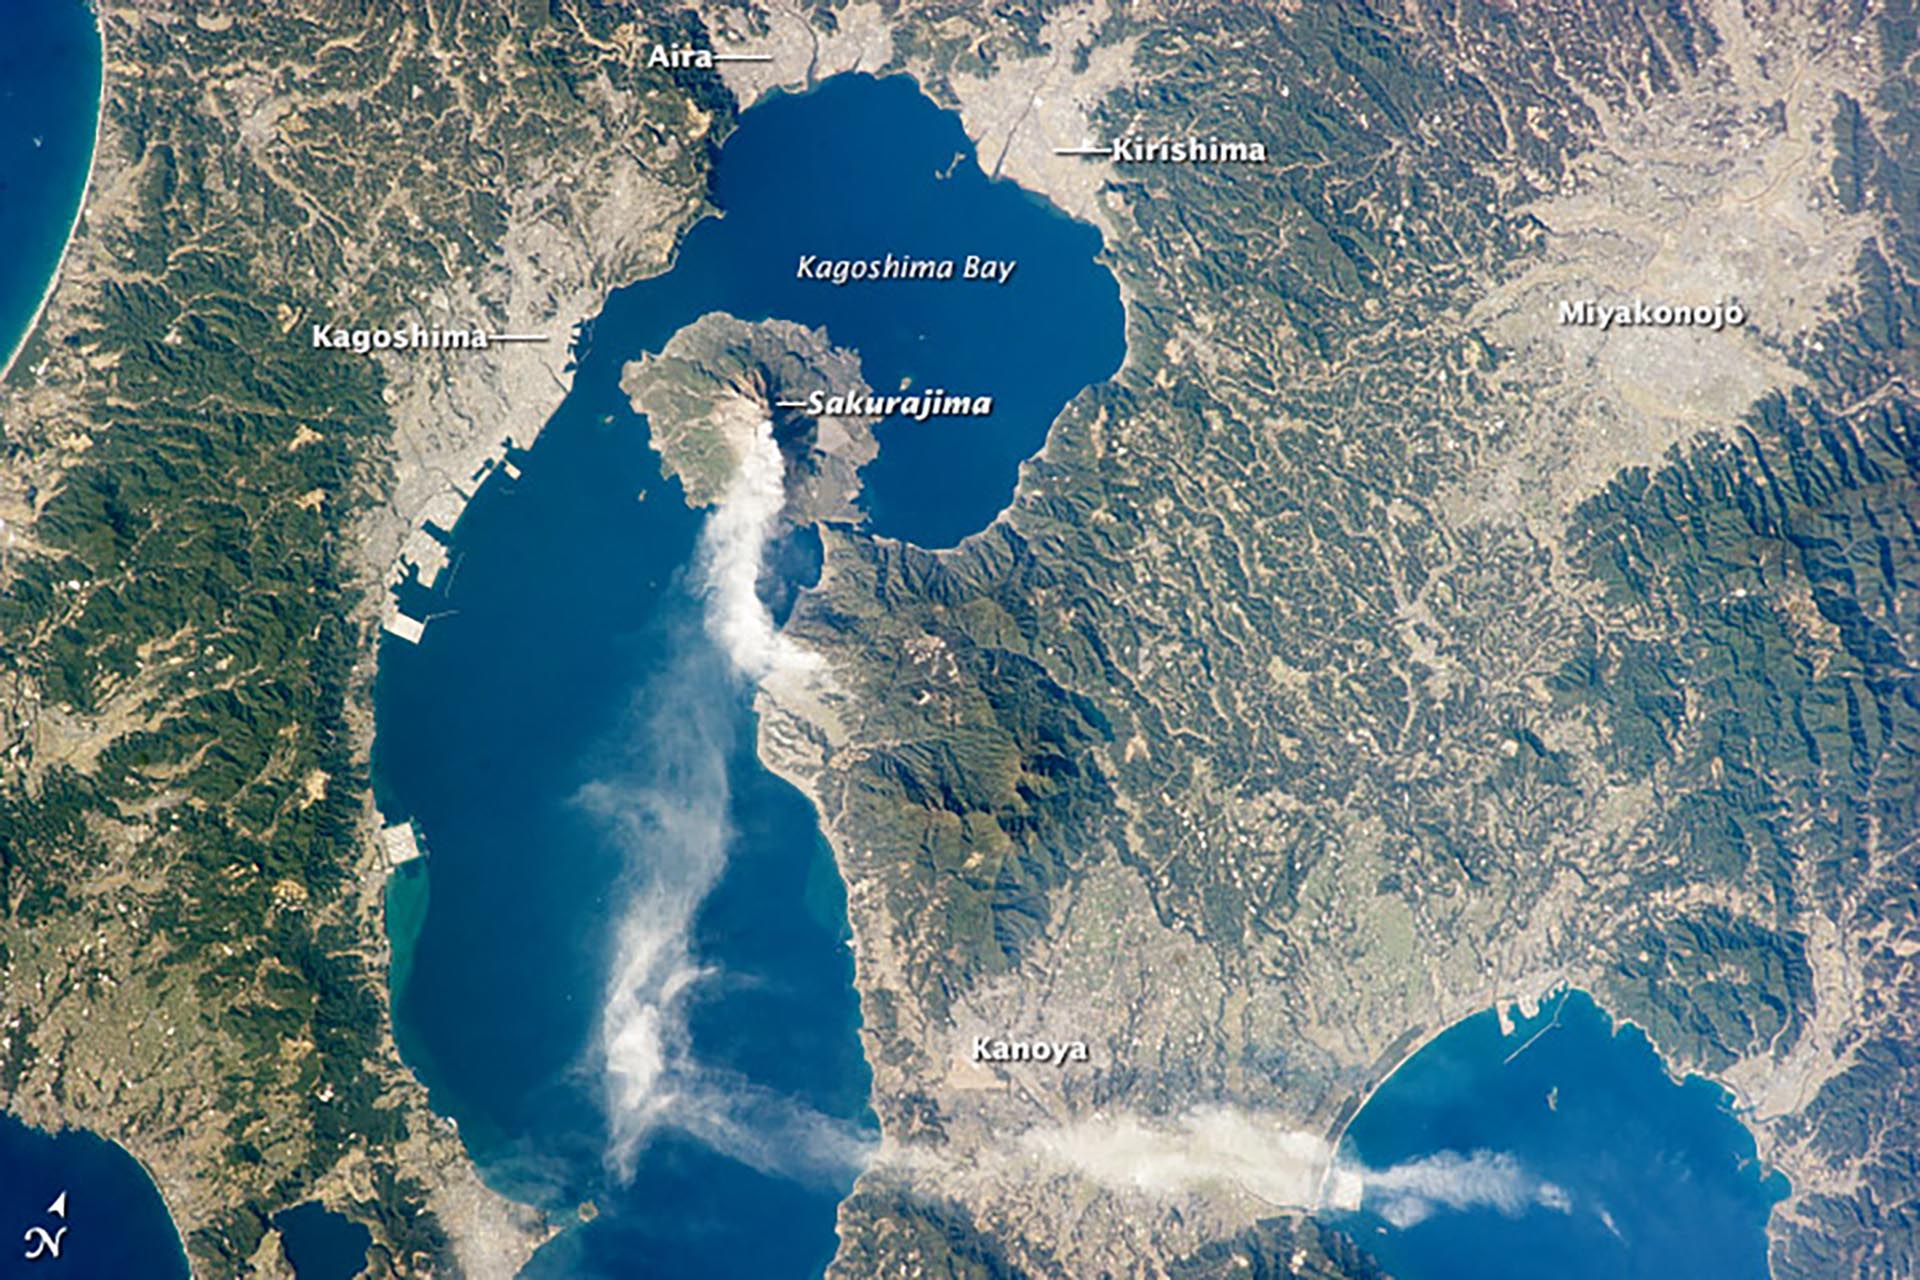 Satellite image of the plume of smoke released by Sakurajima's activity.